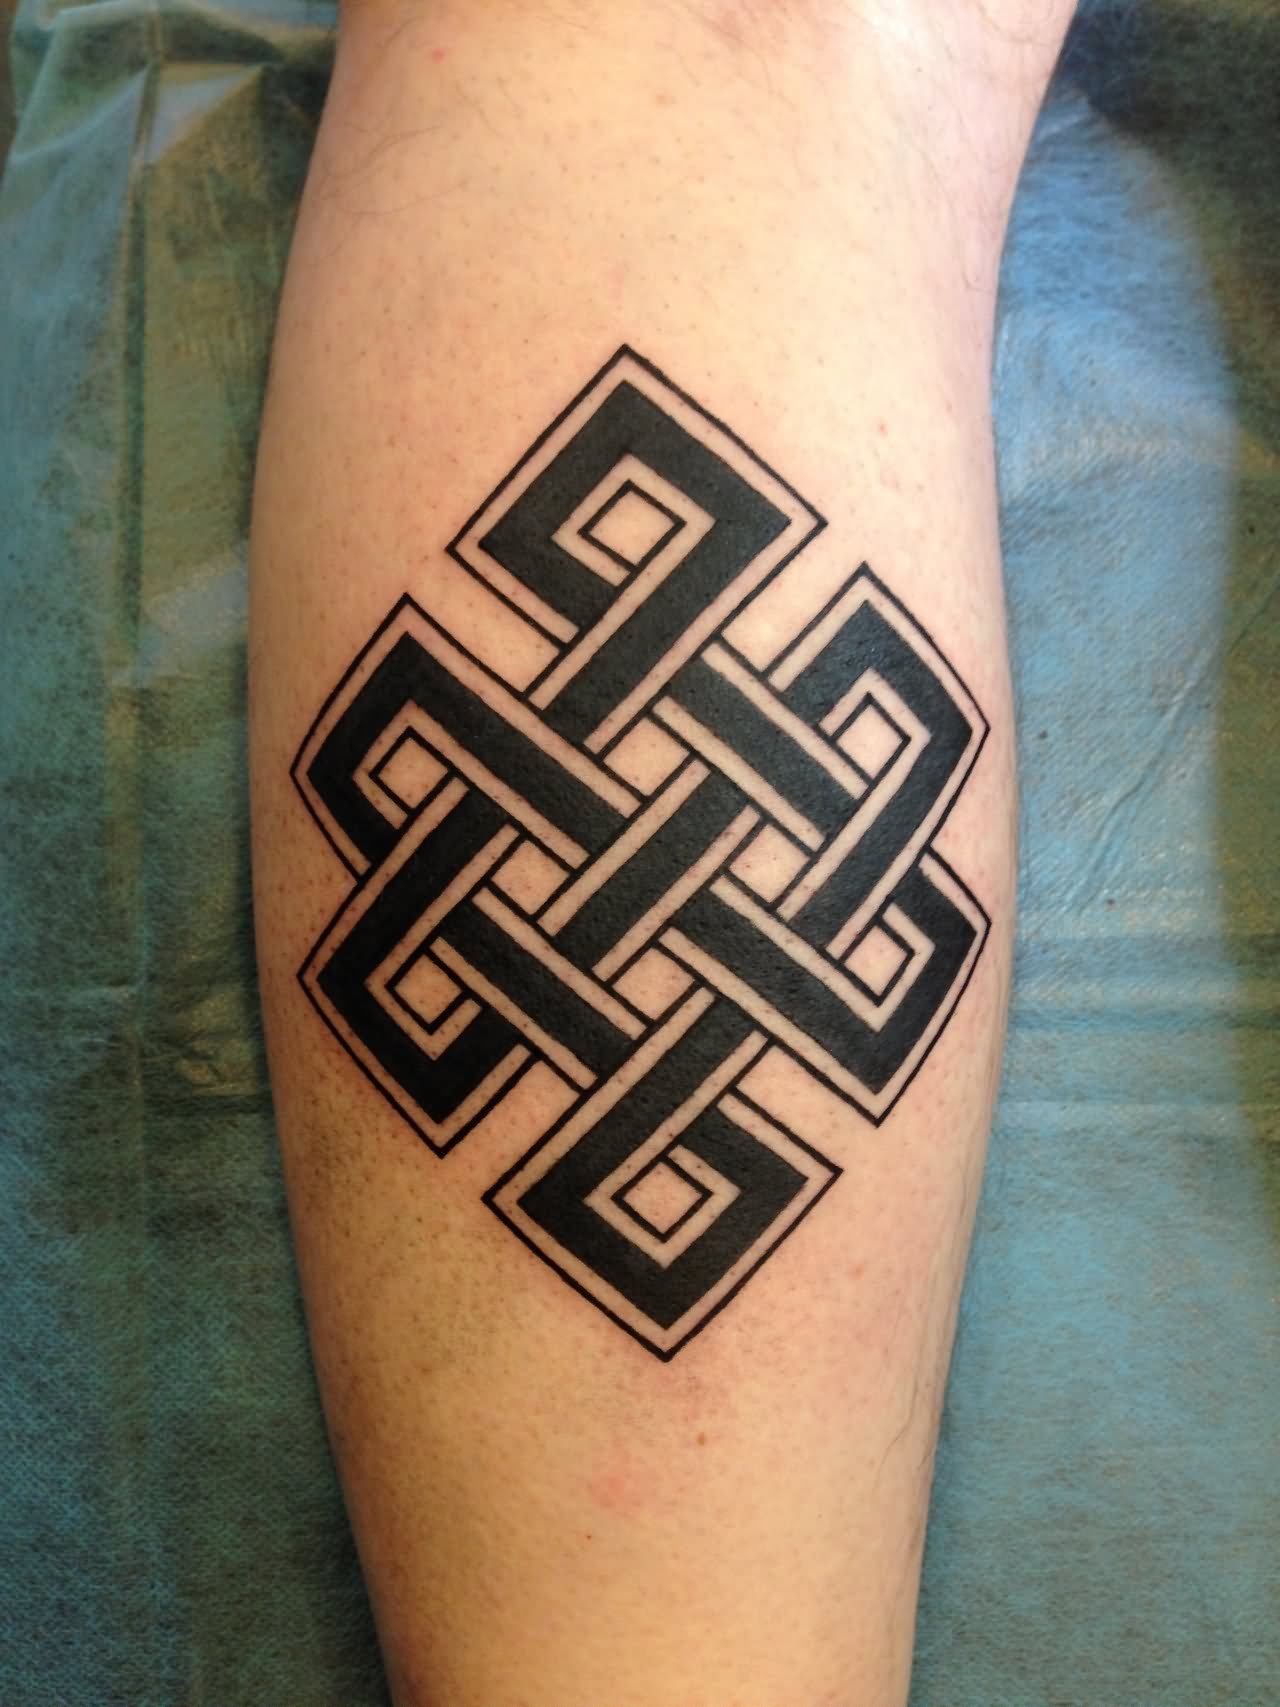 Black Endless Knot Tattoo Design For Leg Calf